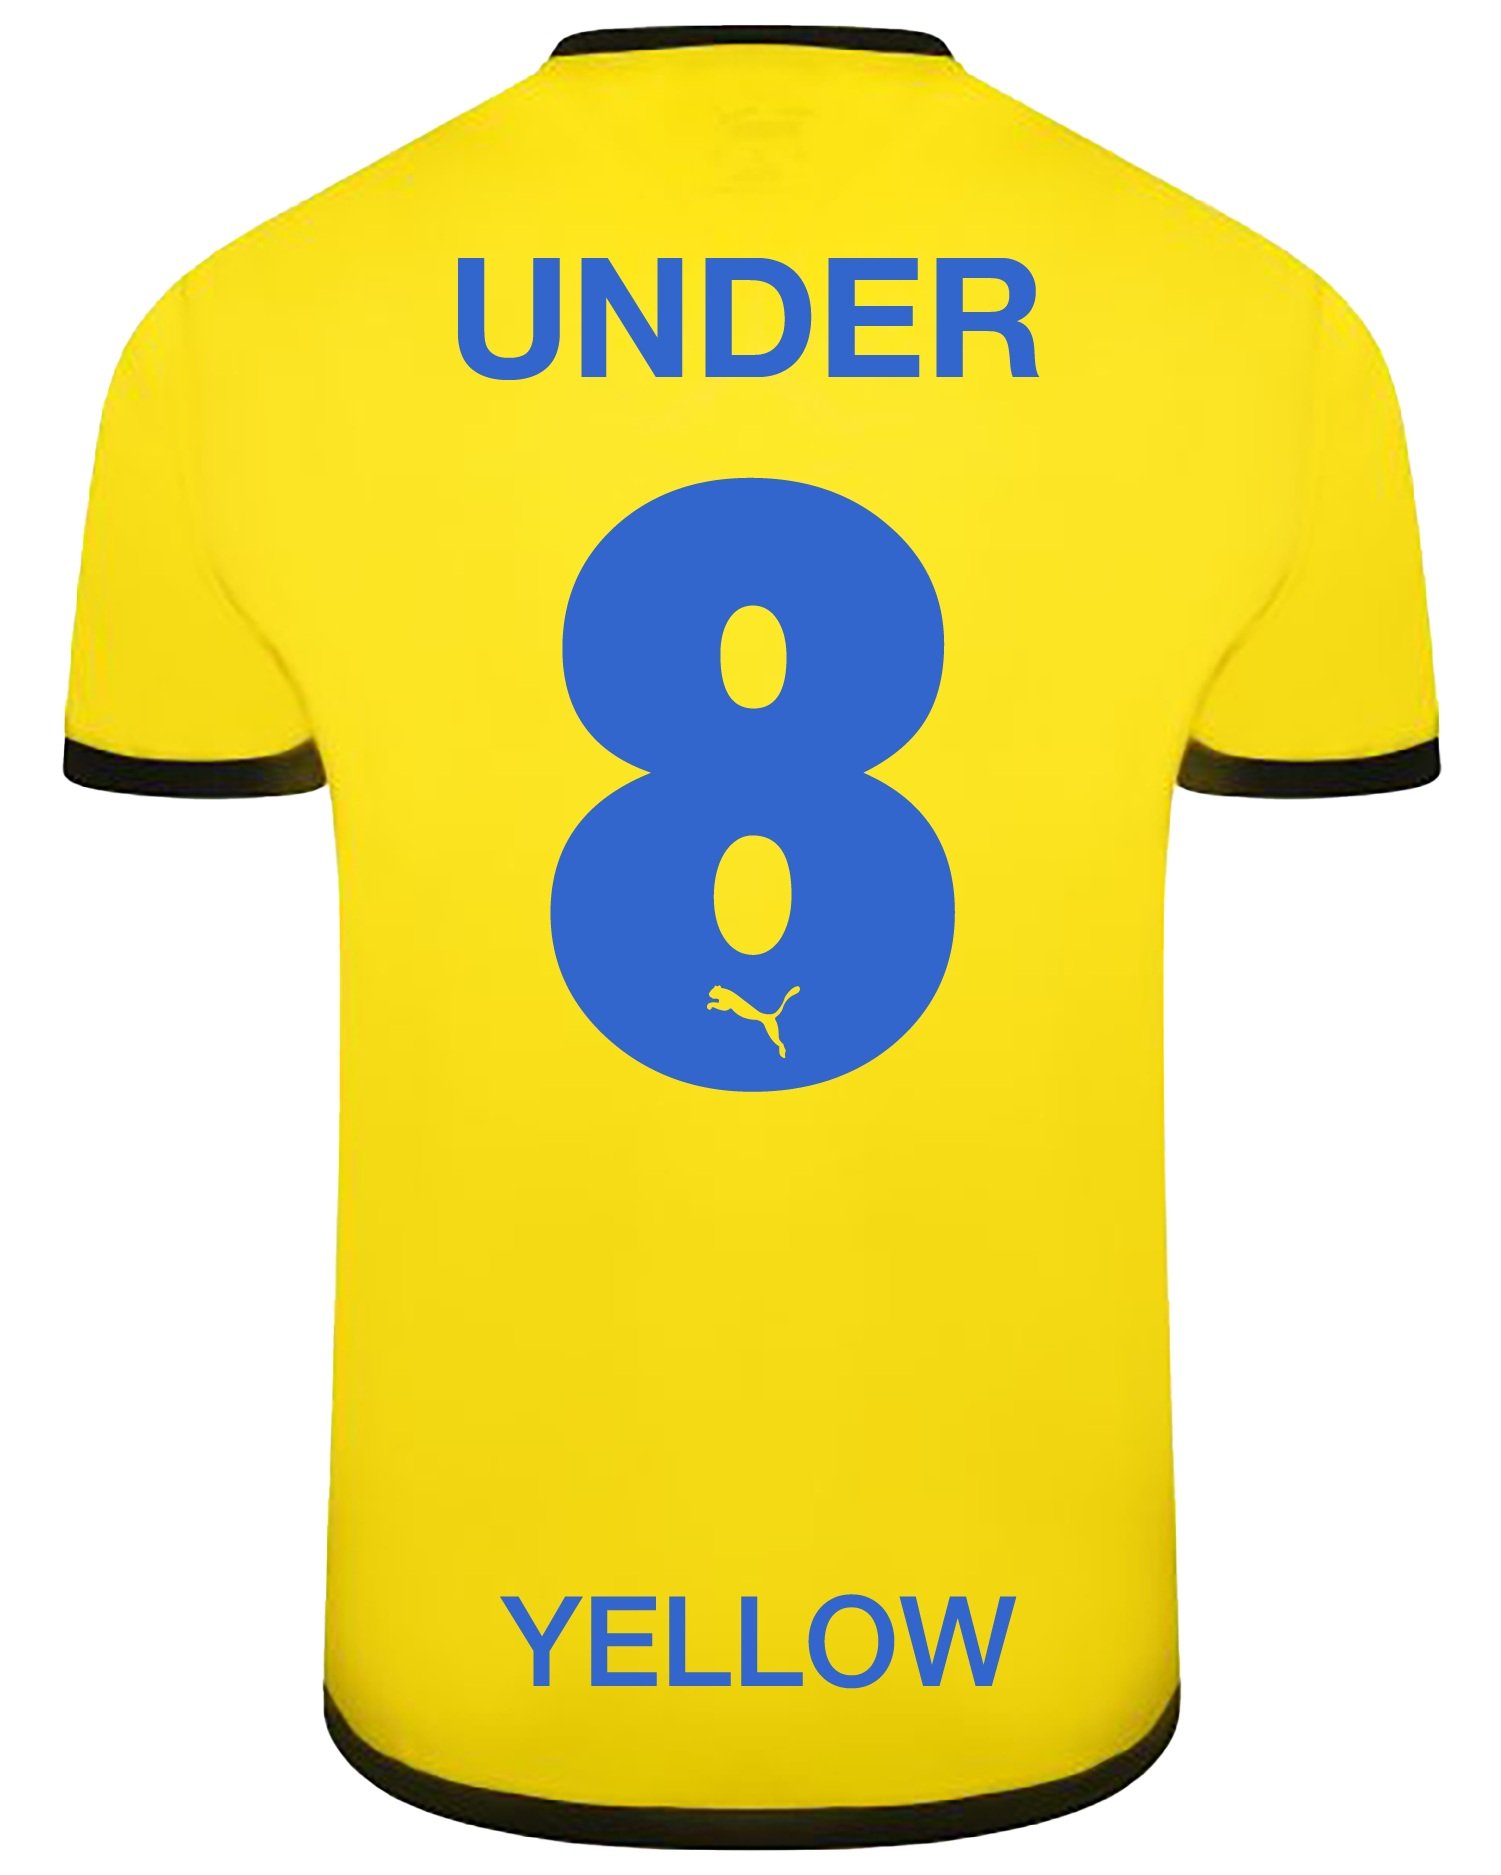 Under 8 (Yellow)